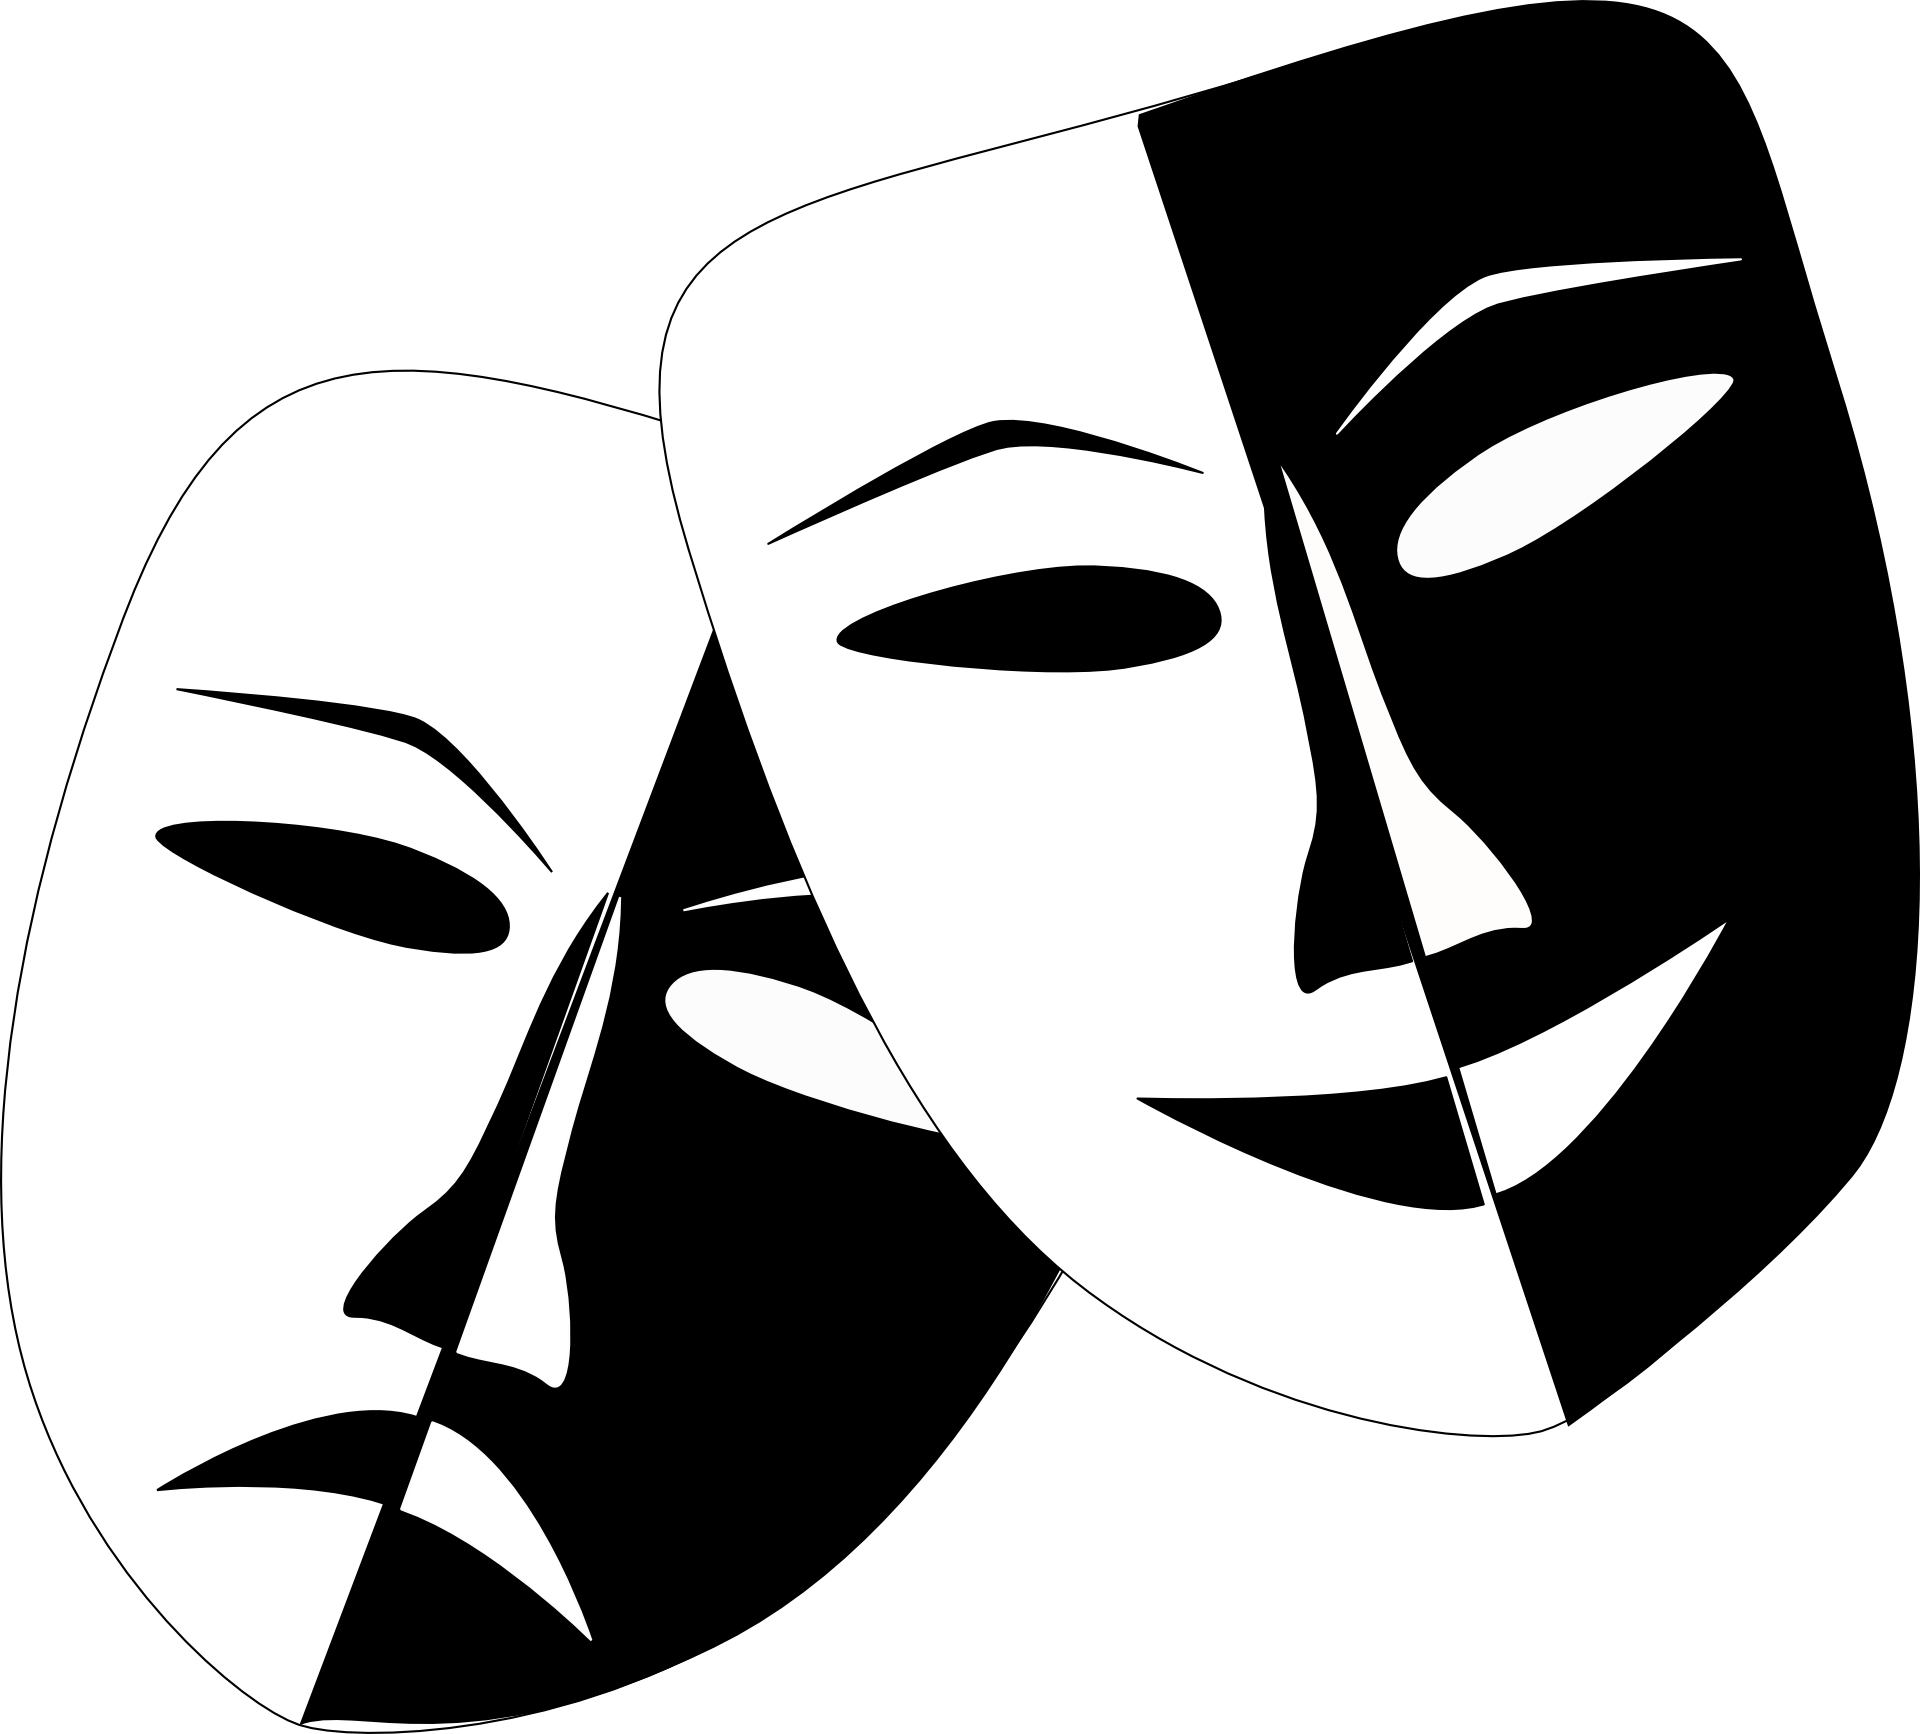 Drama Masks - Tragedy & Comedy